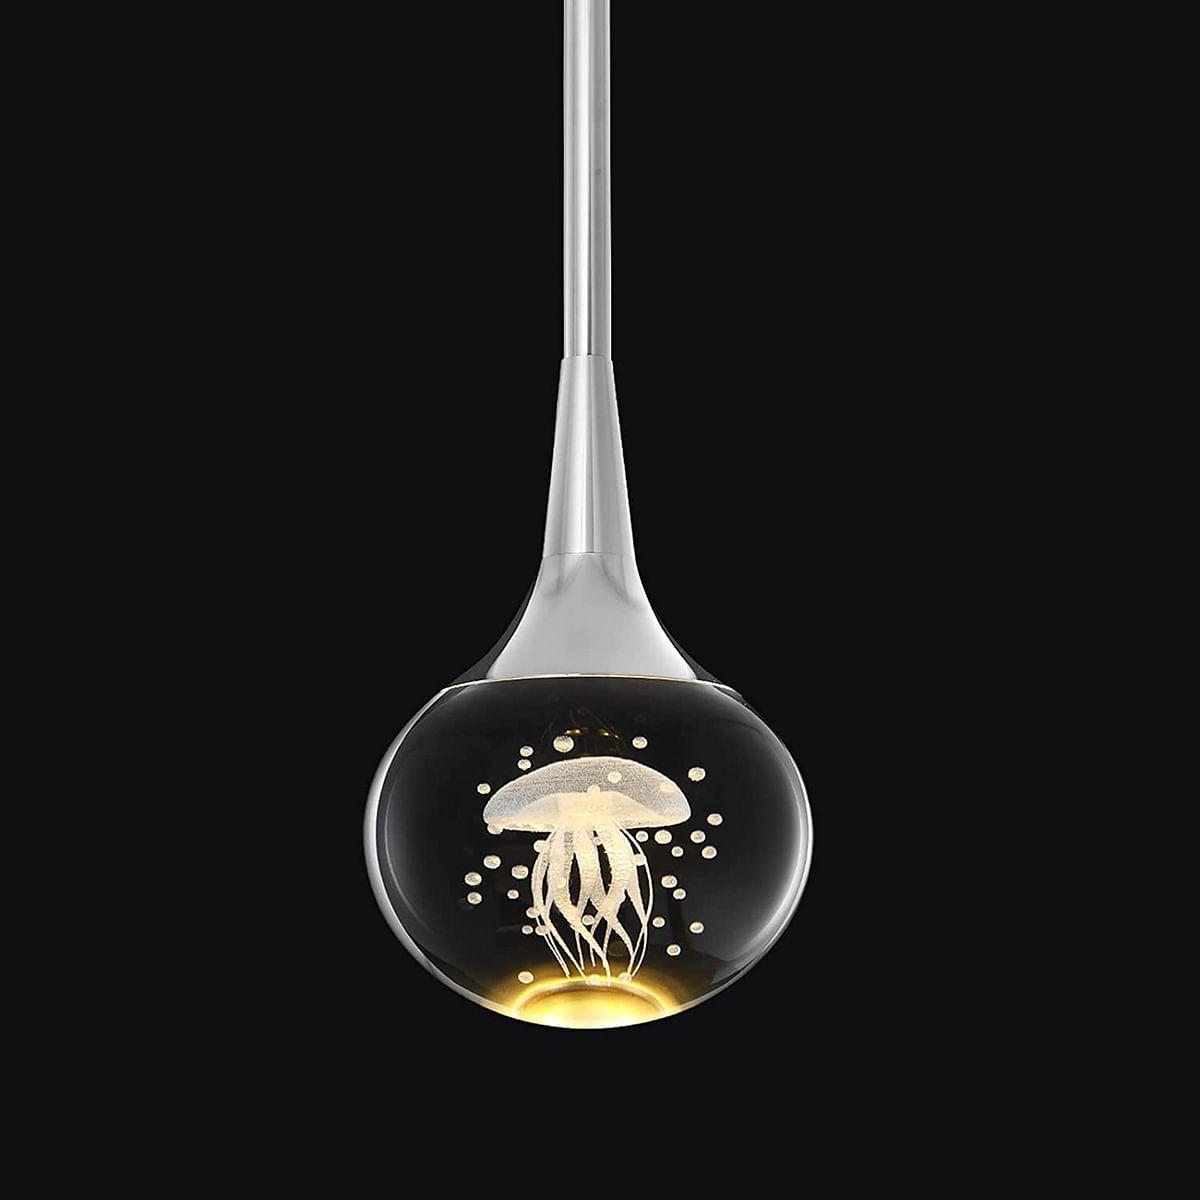 Garwarm Mini Pendant Light, 5W Globe Metal Rod Pendant Lighting, Teardrop Crystal Pendant Light with Jellyfish, 1-Light Dimmable LED Hanging Light Fixture, Kitchen Bar Bedroom Lights, 3200k/Chrome